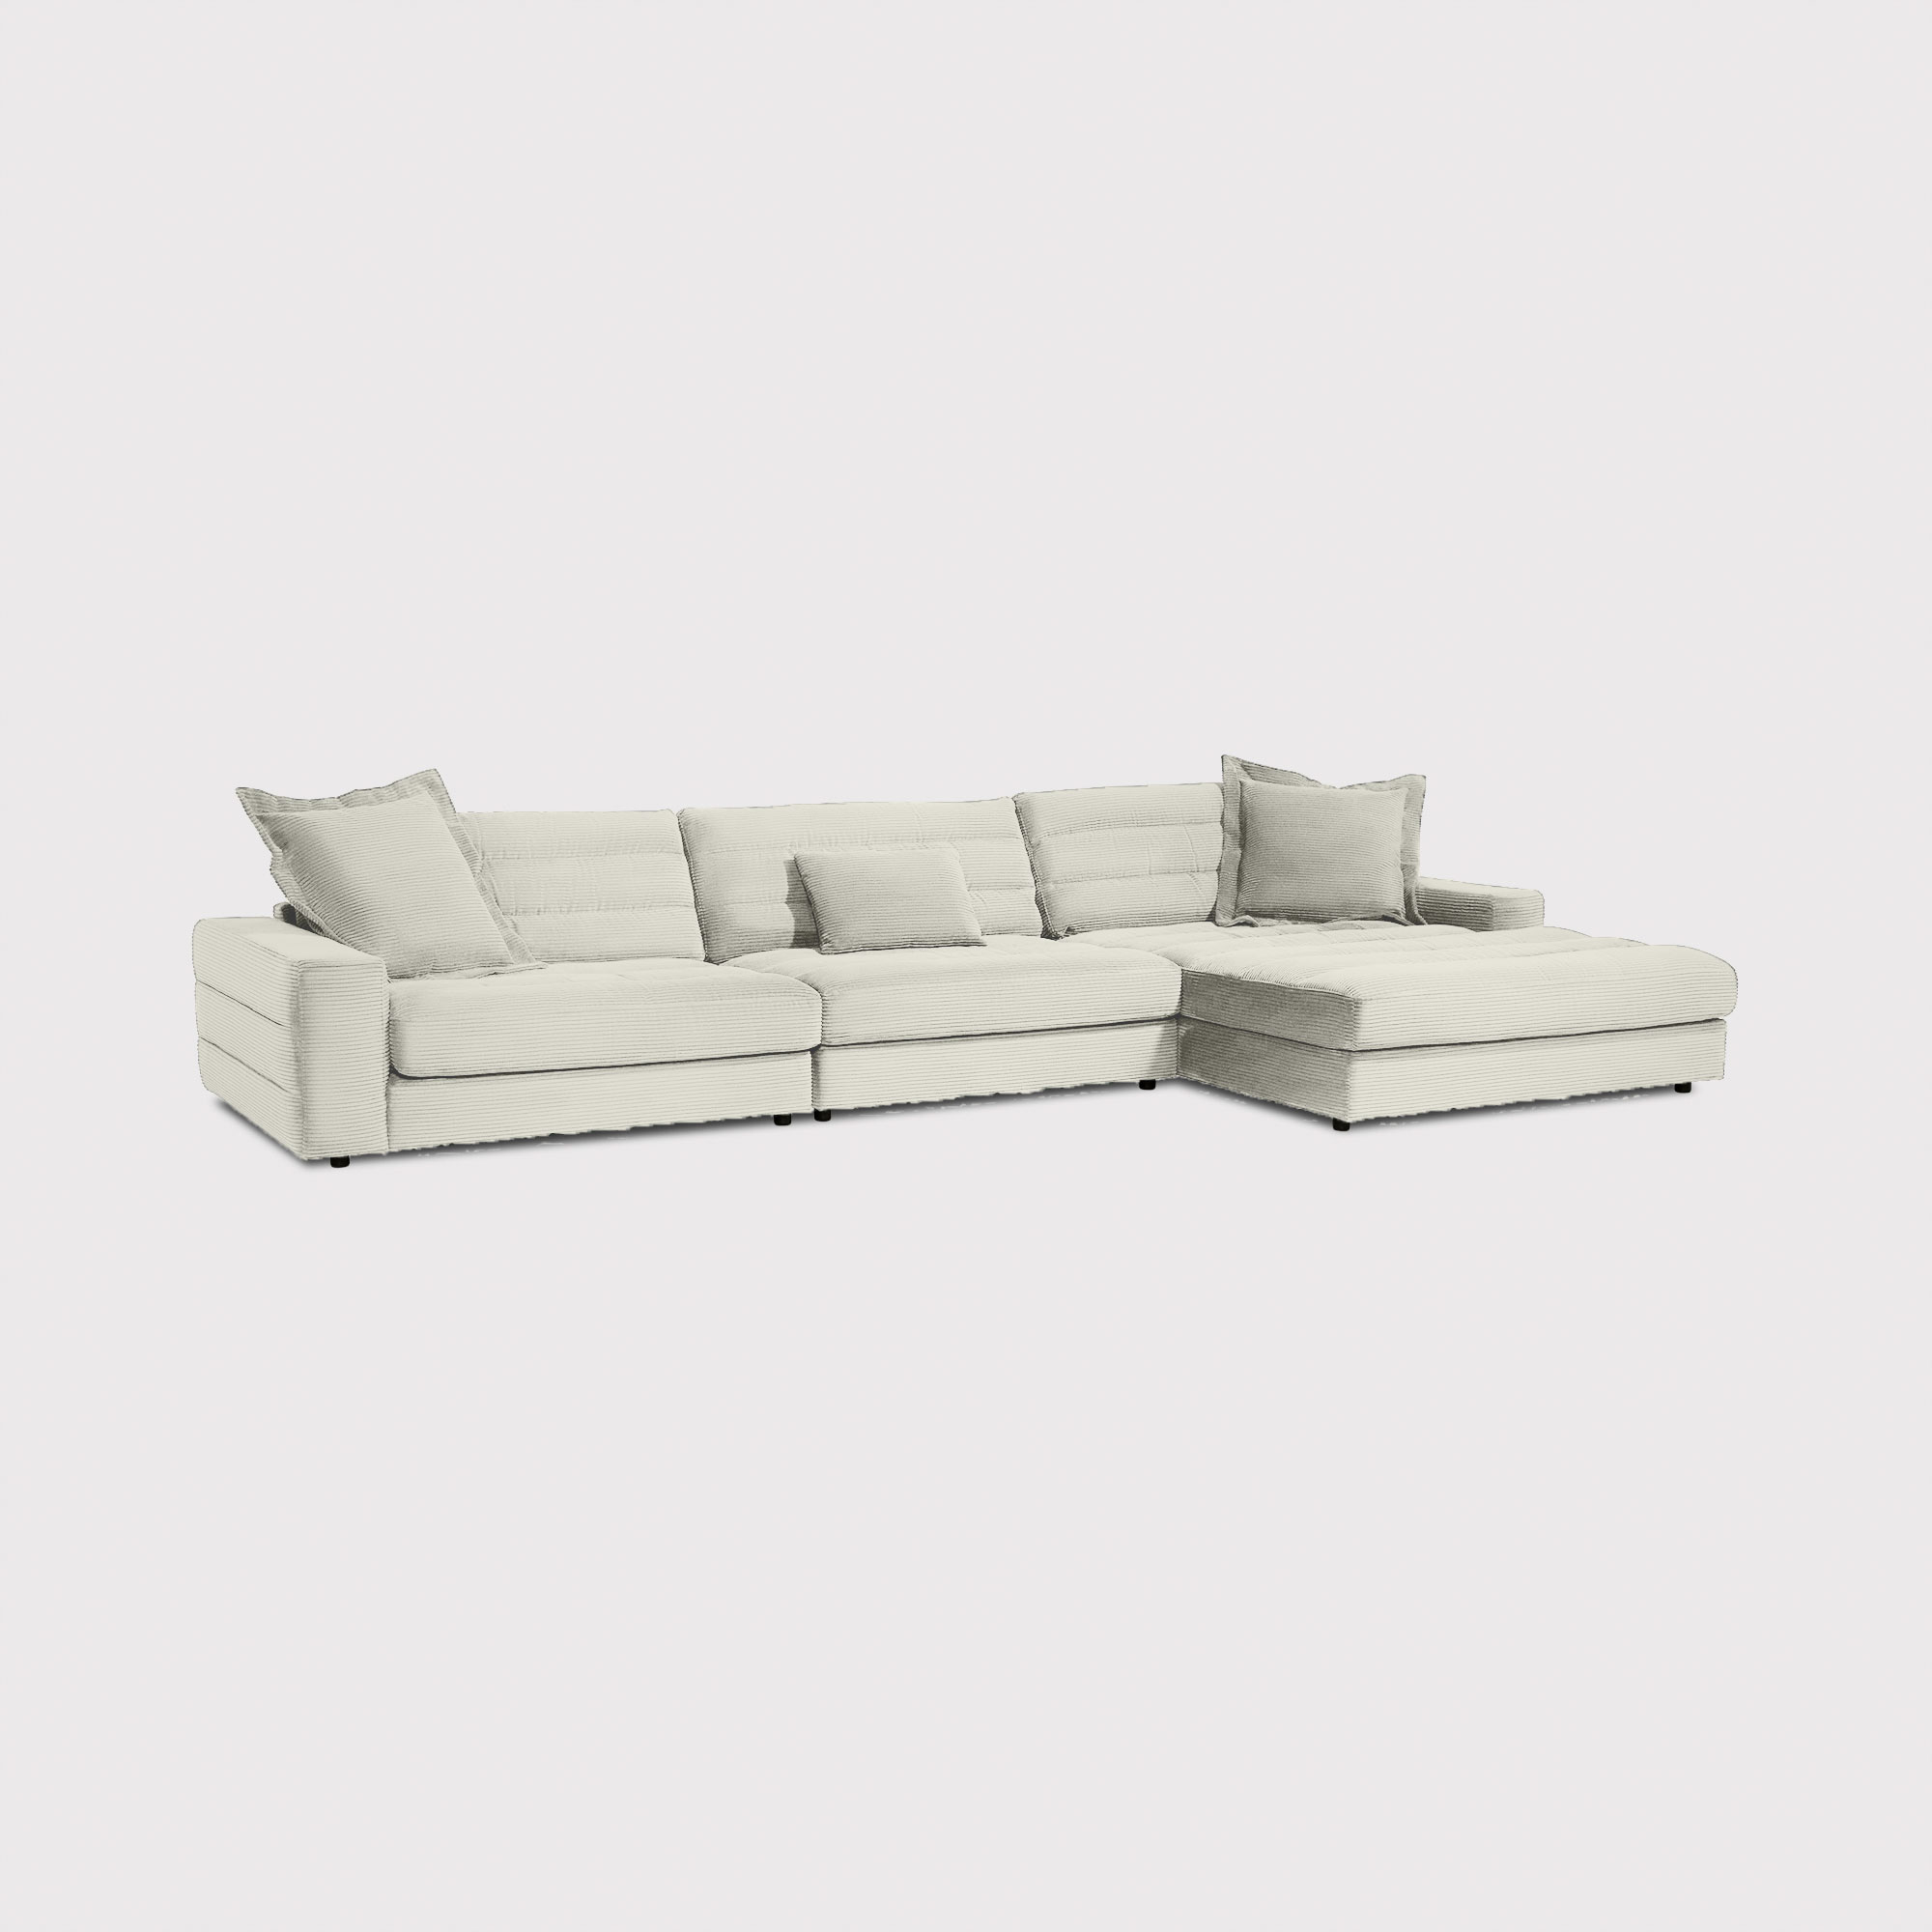 Twain Large Chaise Sofa Right, Grey Fabric | Barker & Stonehouse